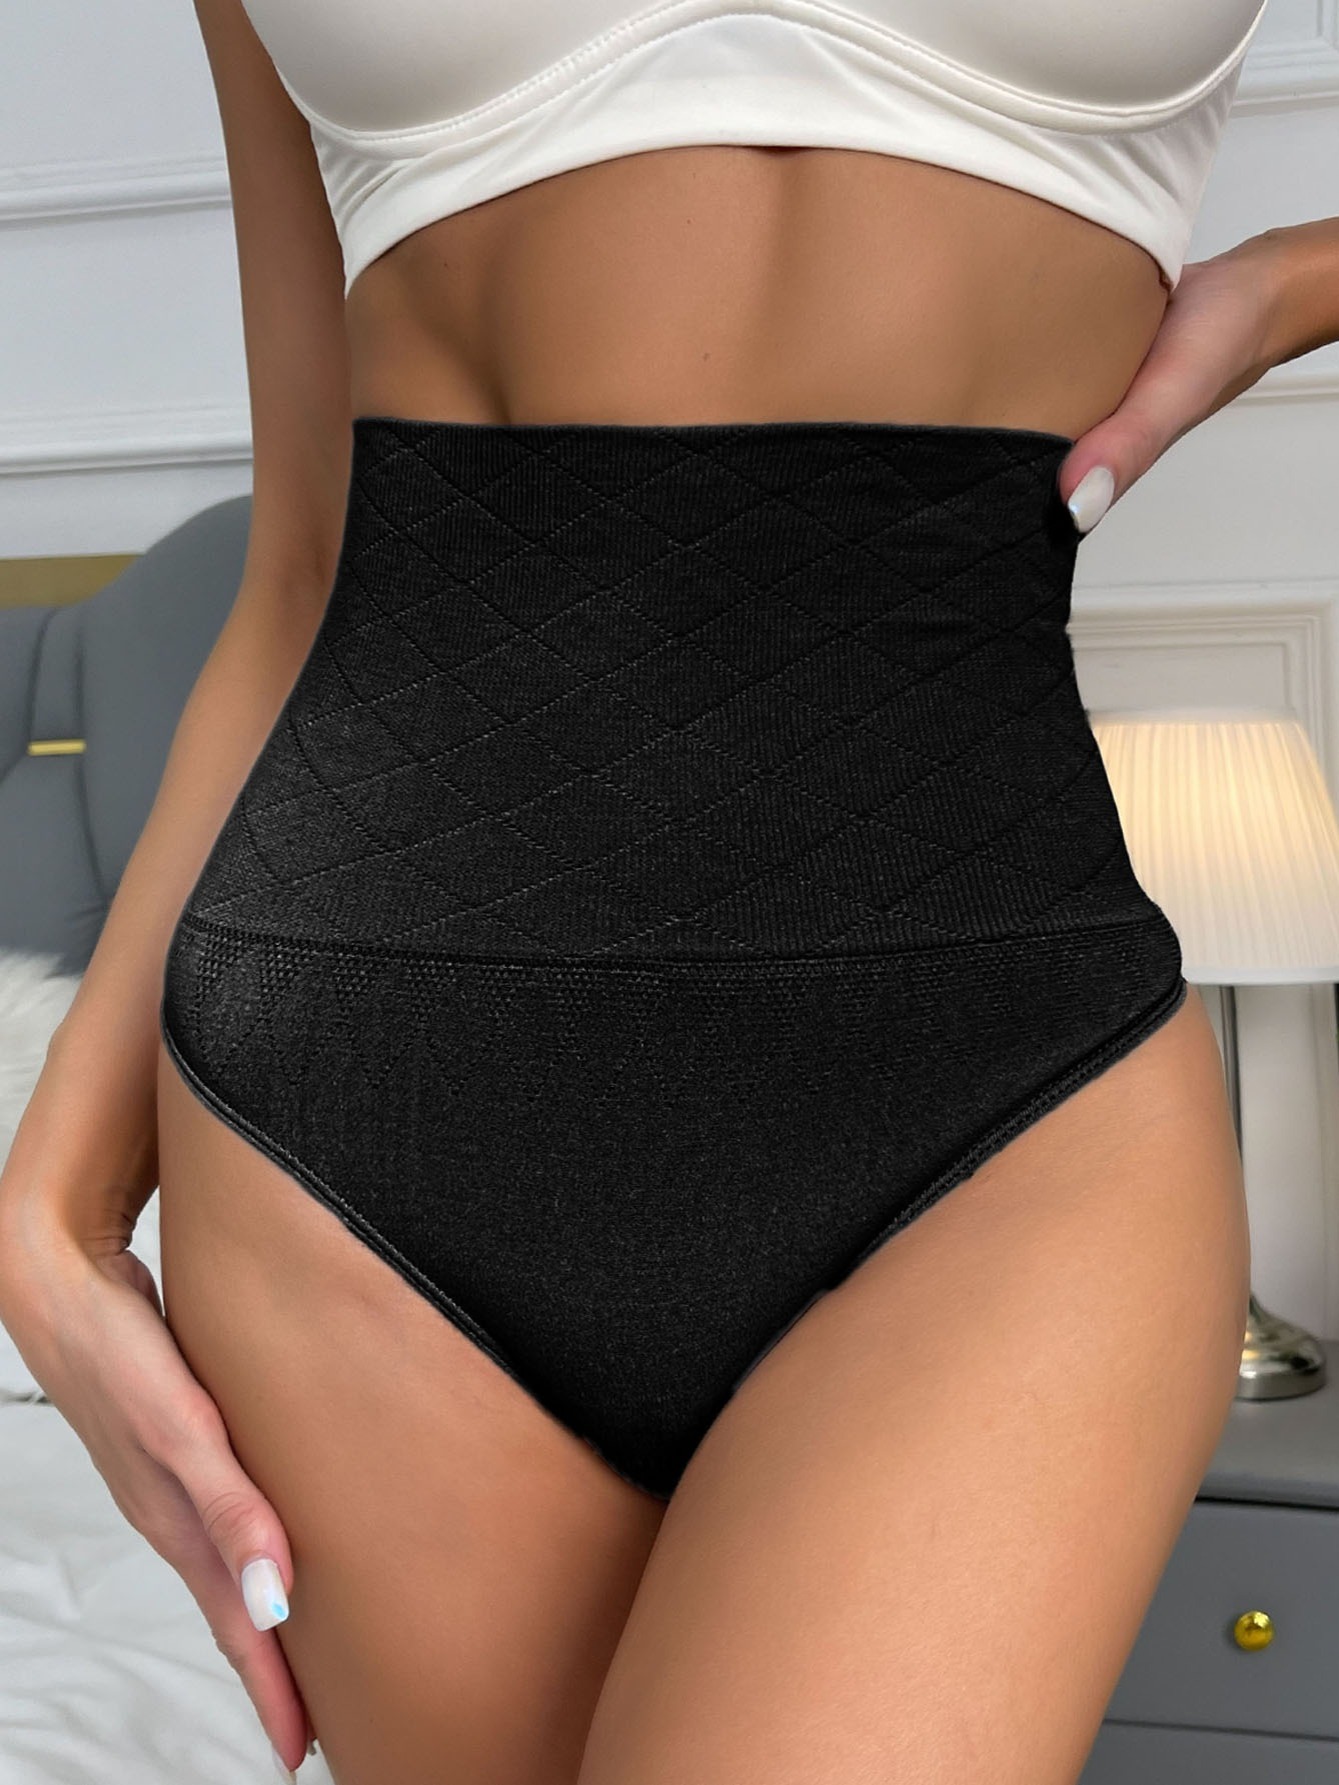 DREAM SLIM Women's High-Waist Seamless Body Shaper Briefs Firm Tummy  Control Slimming Shapewear Panties Girdle Underwear, Nude/Nude, 3X-Large-4X-Large  price in UAE,  UAE